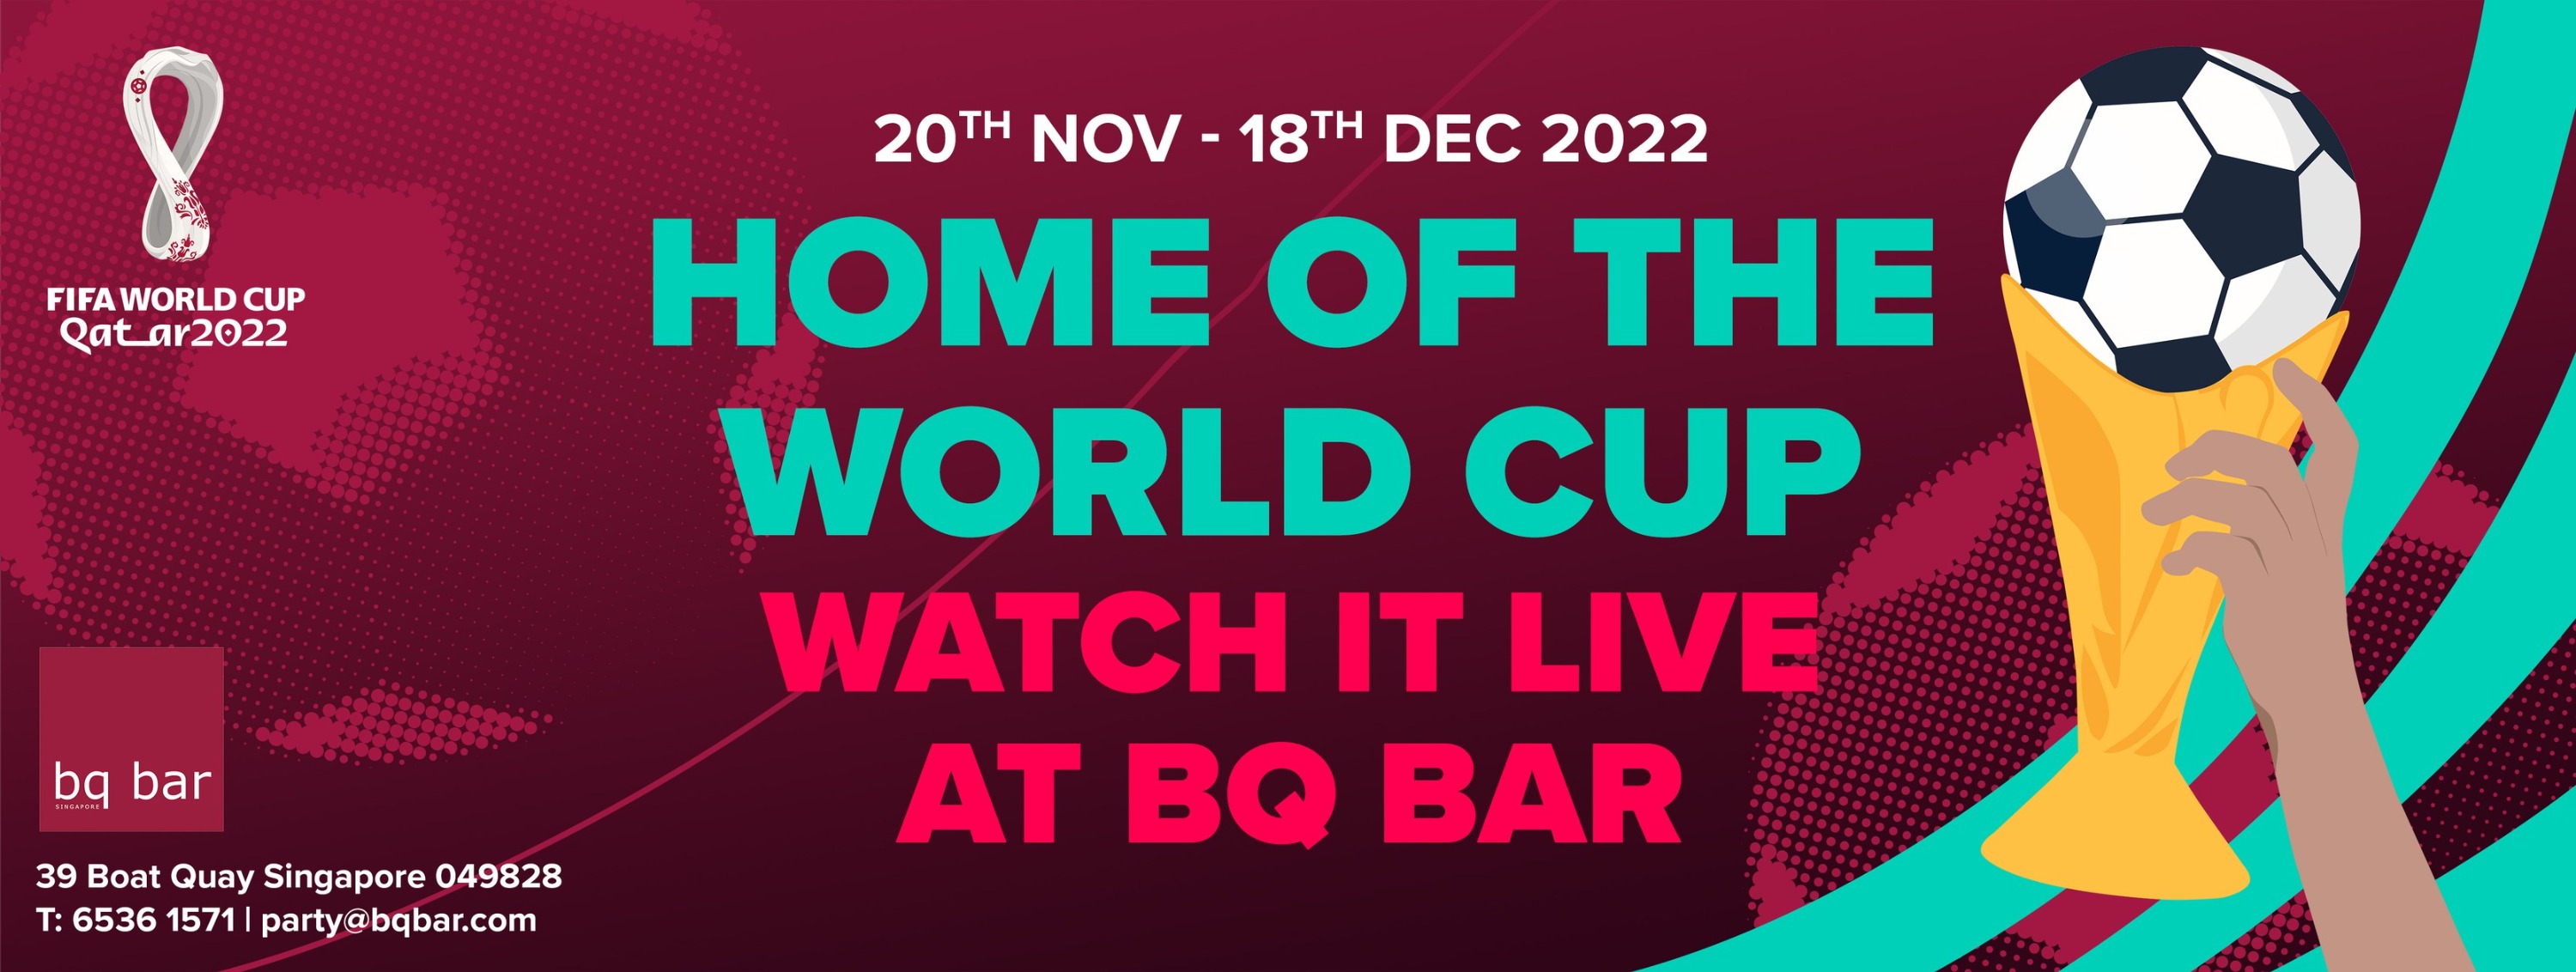 Fifa World Cup Qatar 2022 Live-Screening